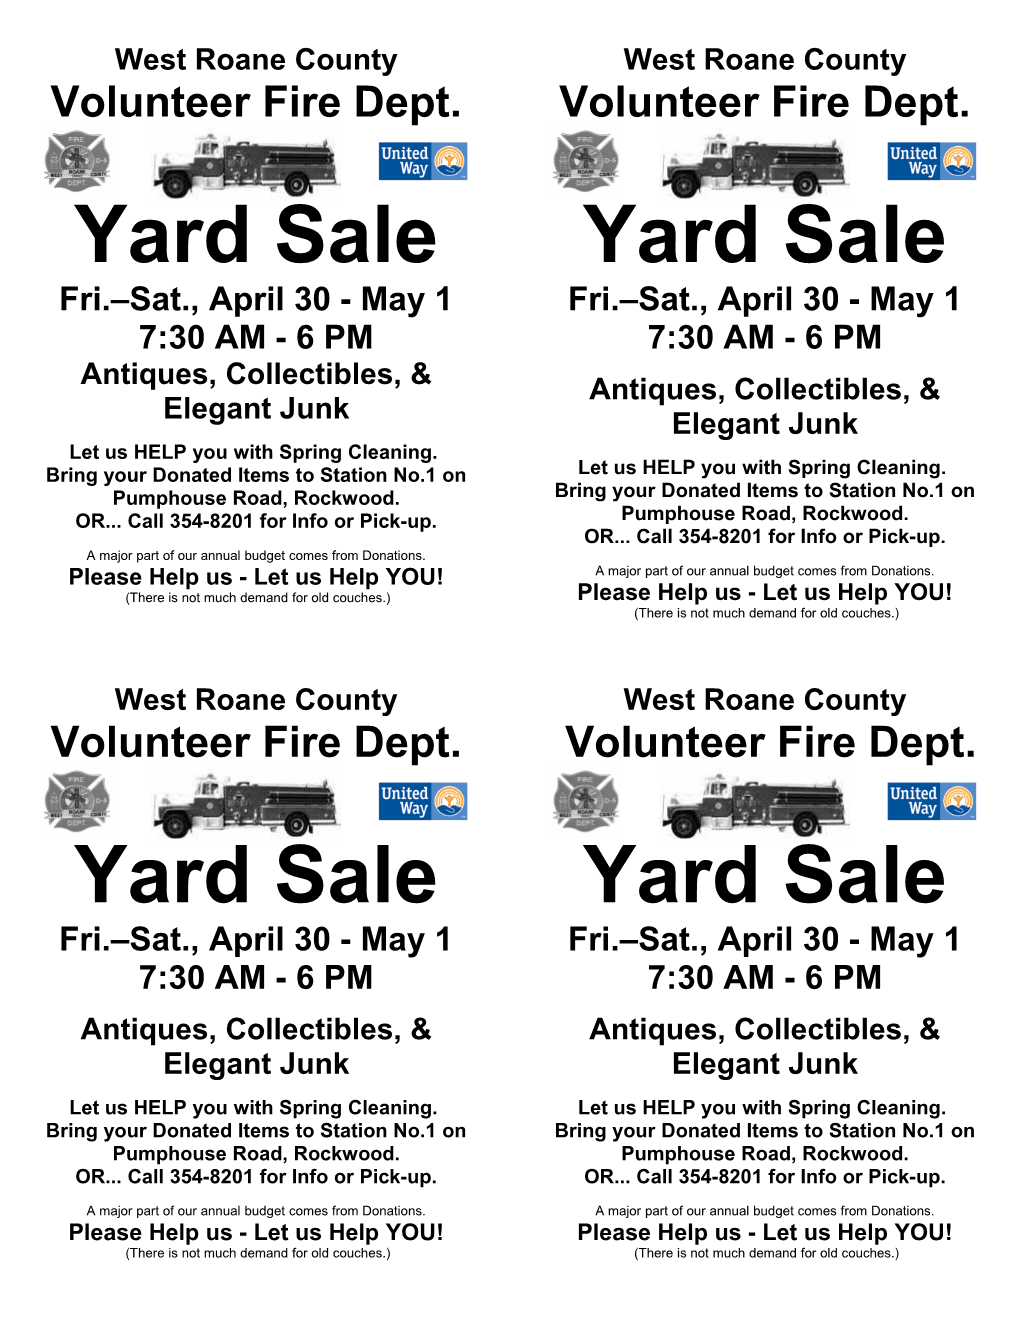 WRCVFD Yard Sale Flyer 2010